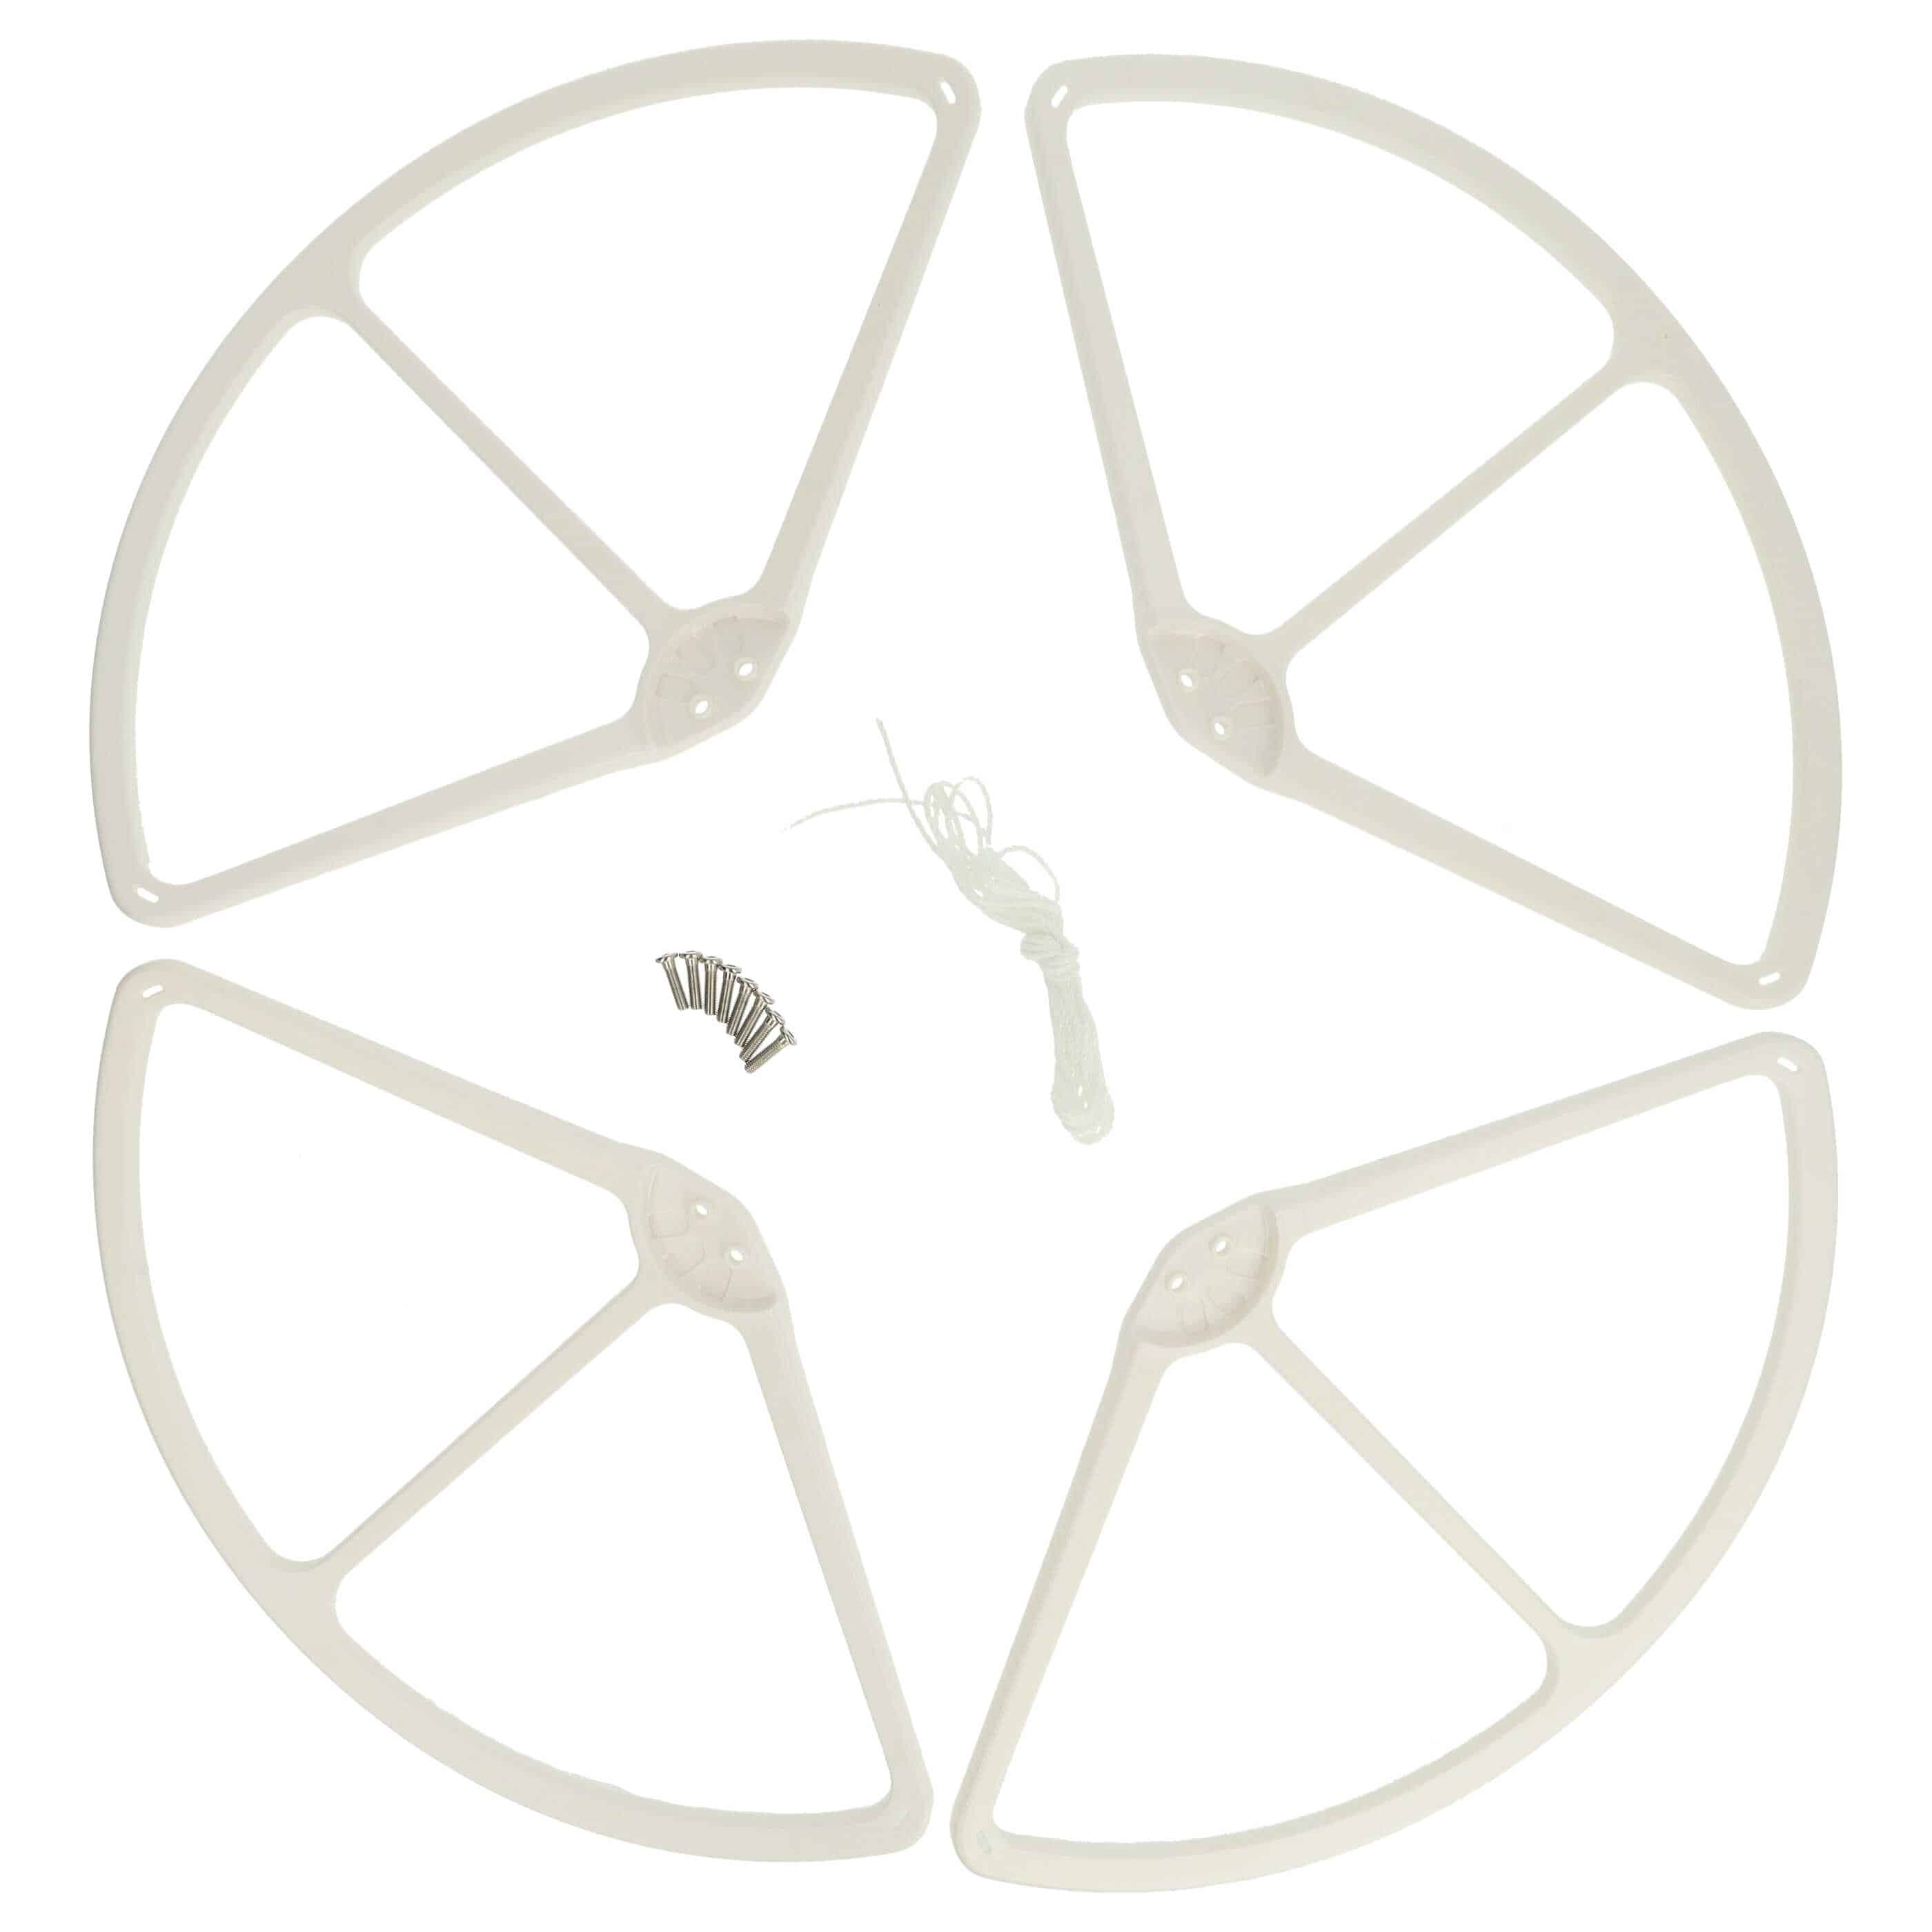 4x Guarda hélice para drones DJI Phantom 3 Advanced - Protector de hélices blanco